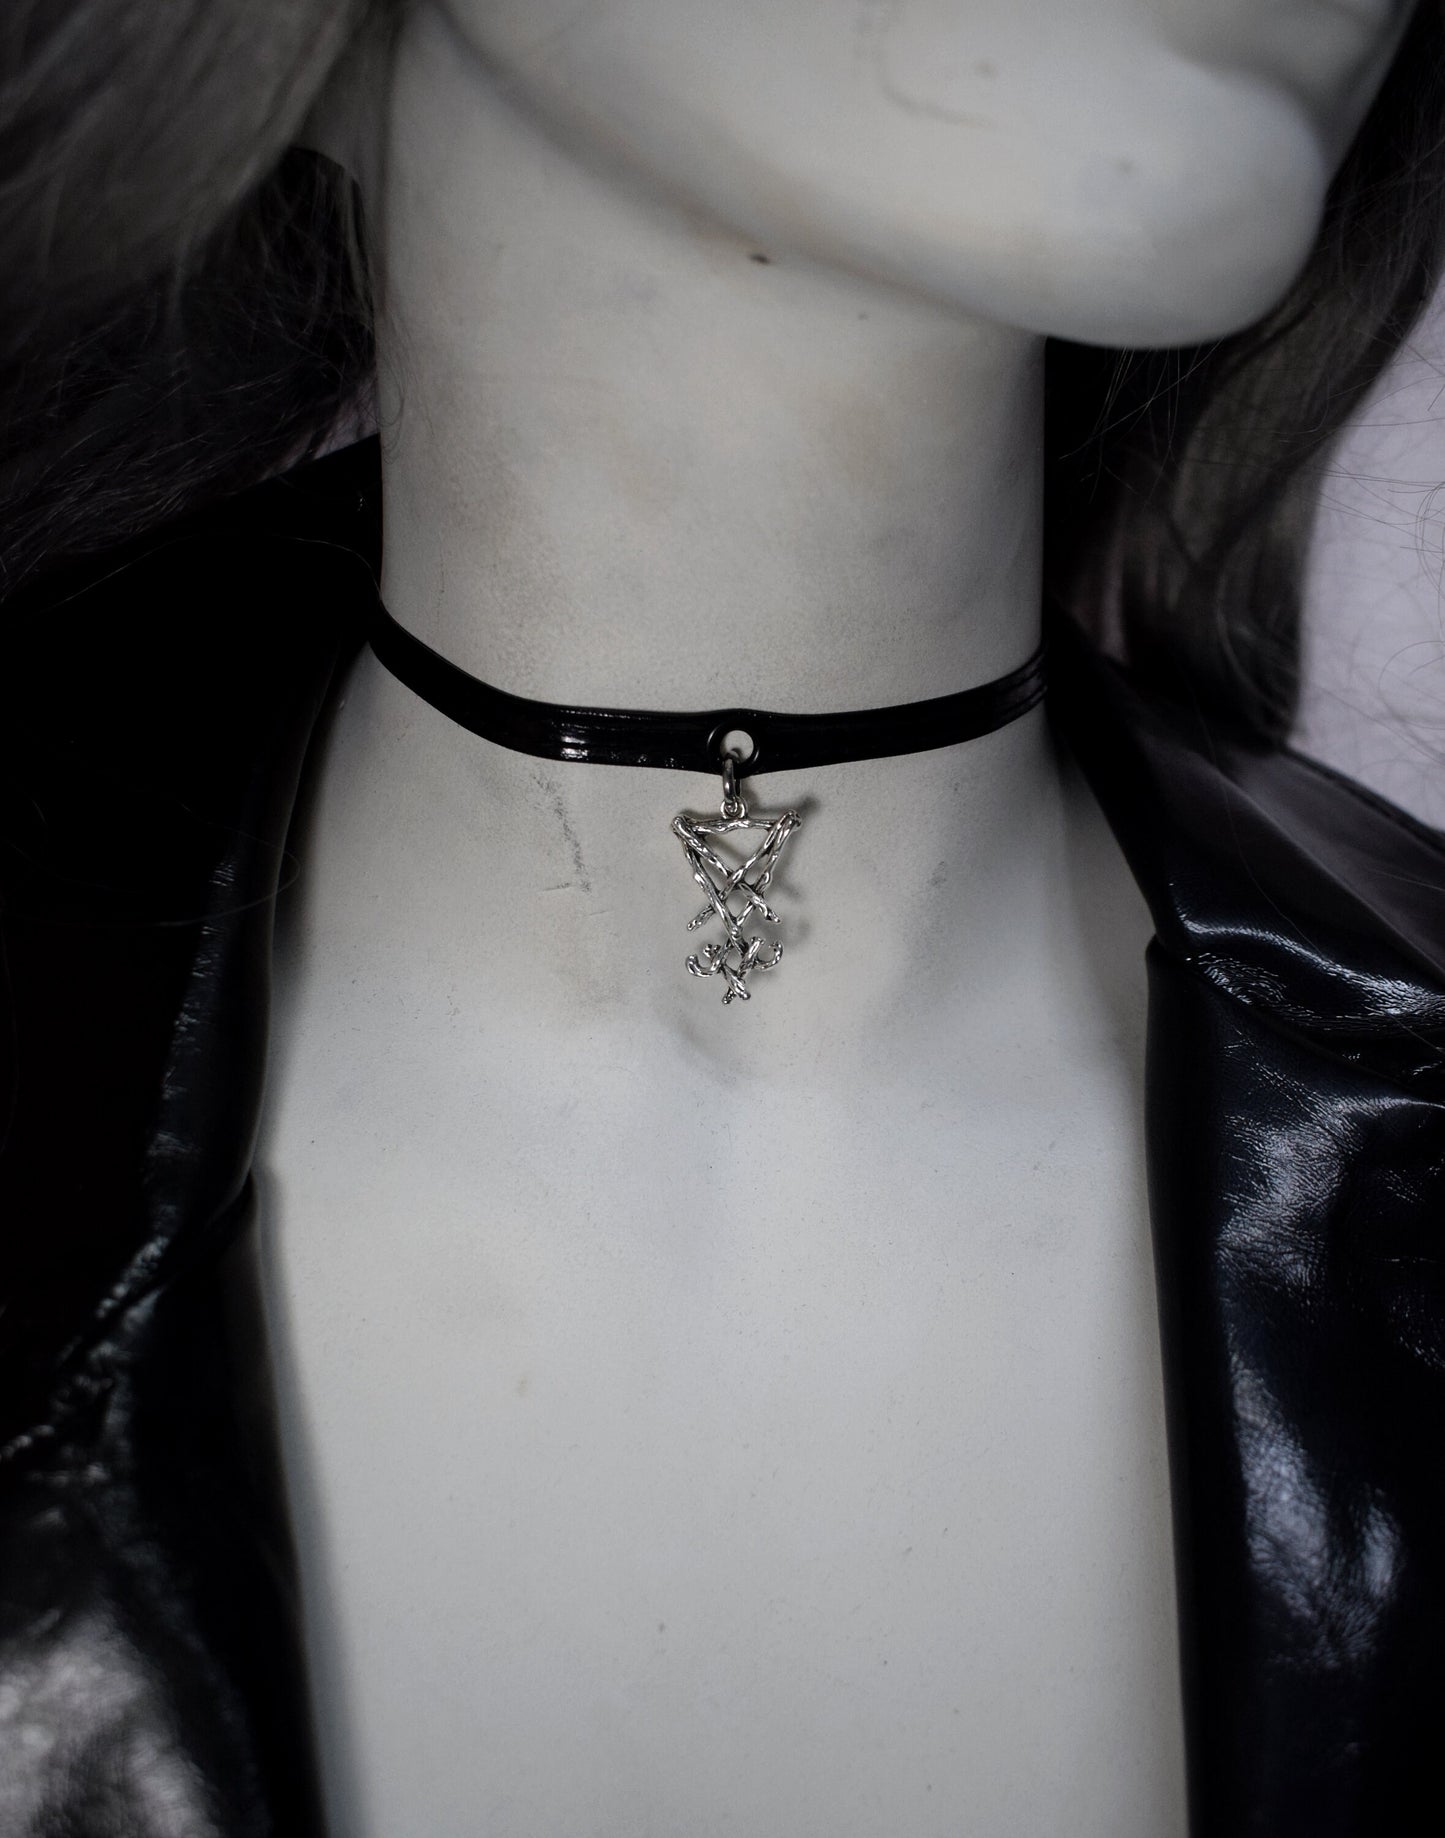 PVC Vegan Leather choker necklace Leviathan Necklace - Antichrist Satanic cross pendant - Lucifer sigil pentagram choker